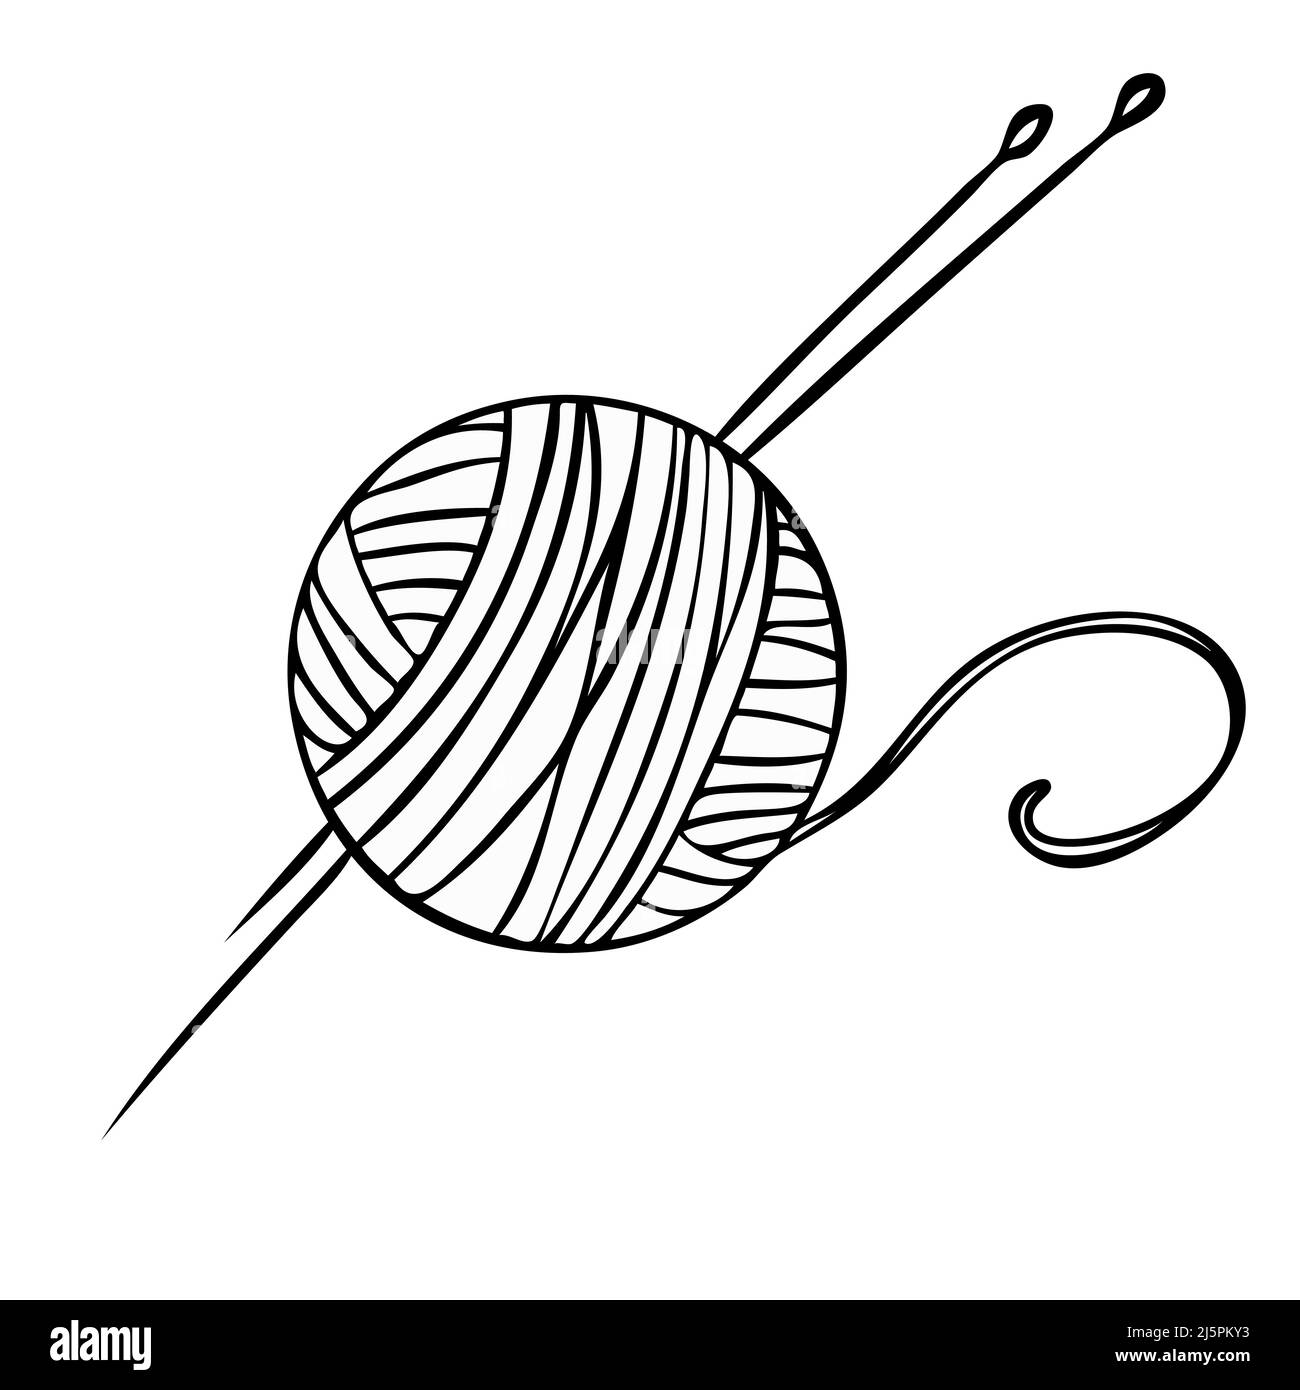 Norwegian knitting thimble Stock Photo - Alamy